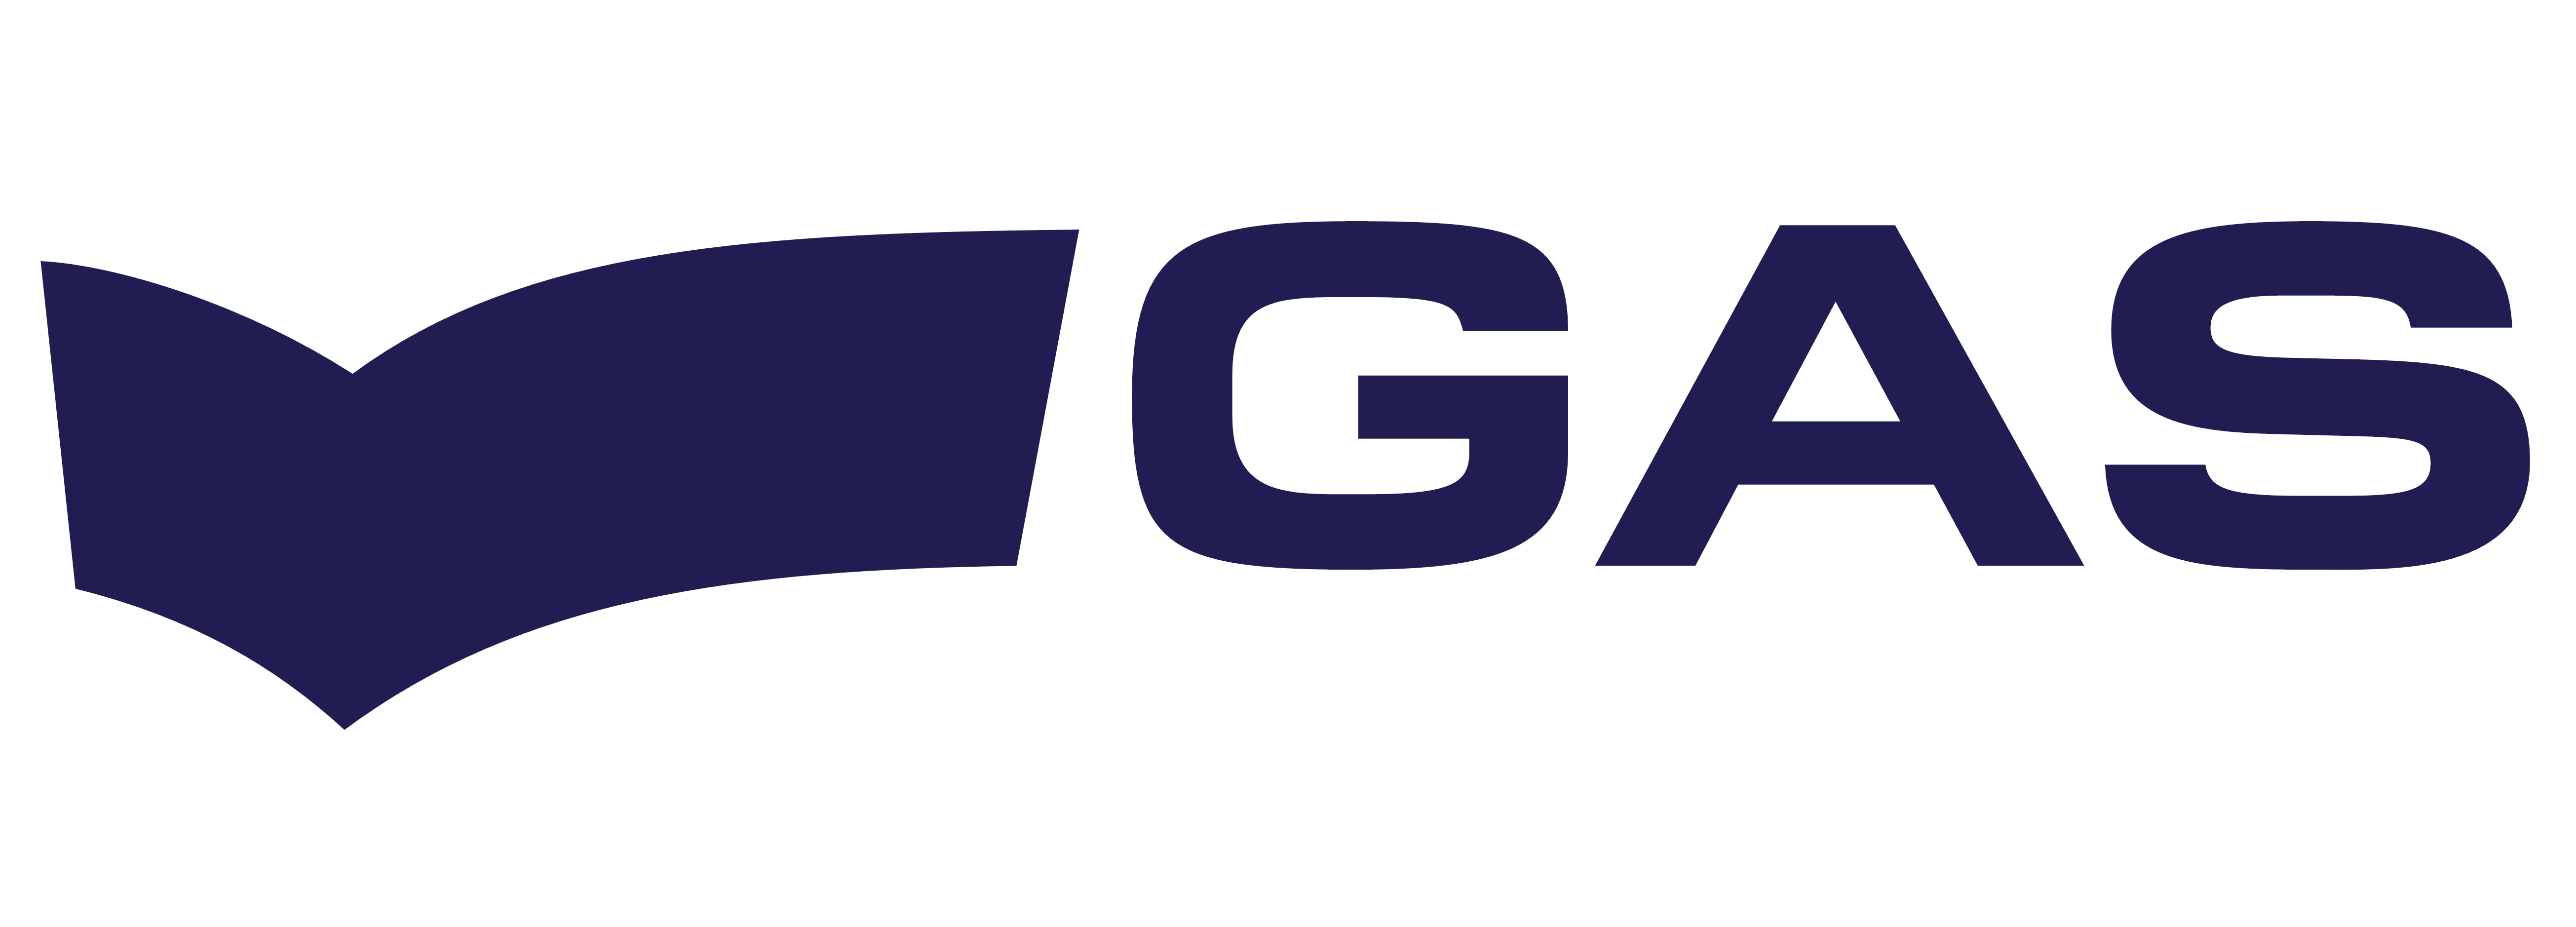 Jeans Logo - GAS Jeans – Logos Download